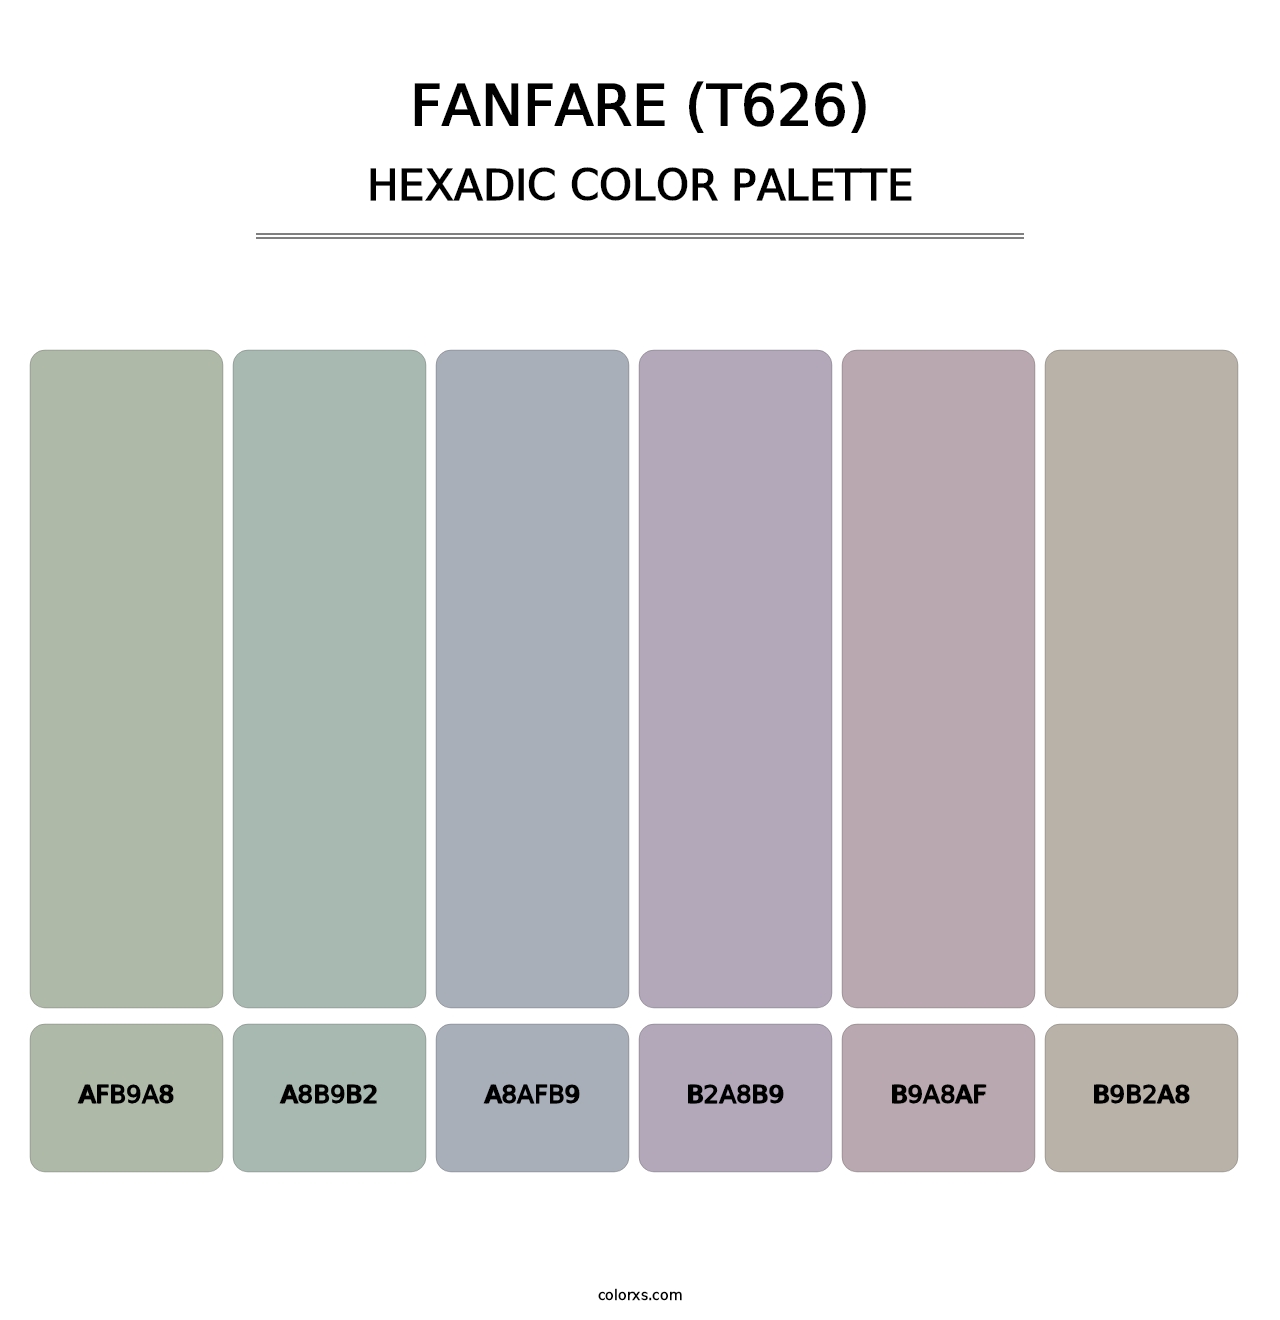 Fanfare (T626) - Hexadic Color Palette